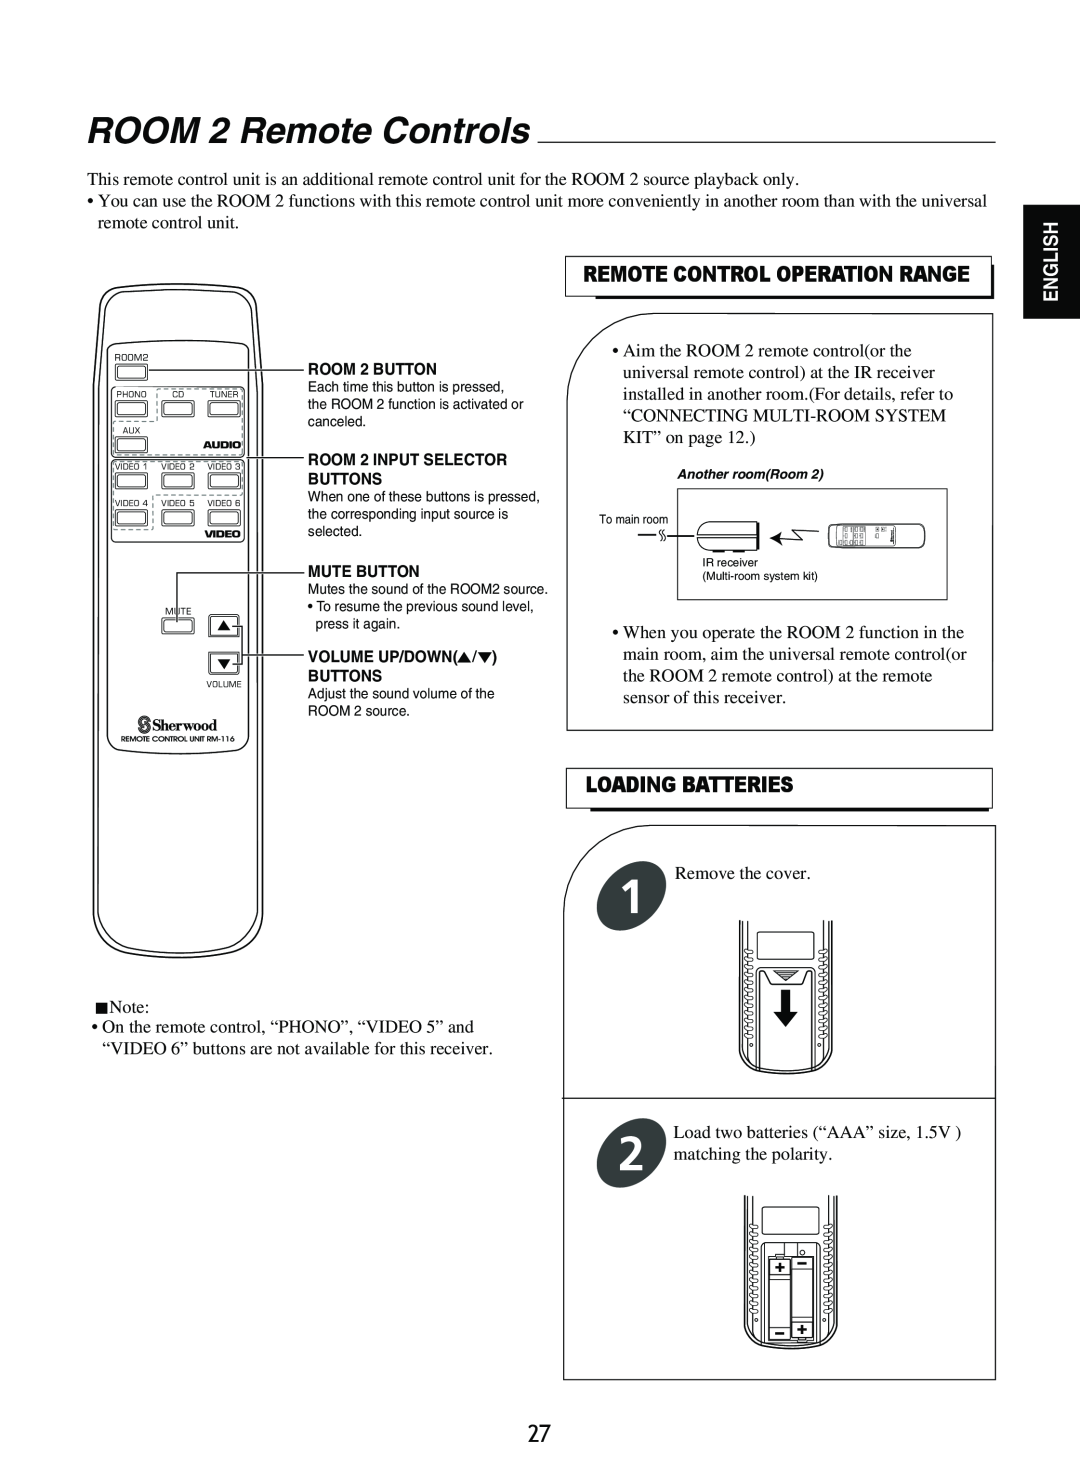 Sherwood R-865 manual ROOM 2 Remote Controls, Loading Batteries, English 